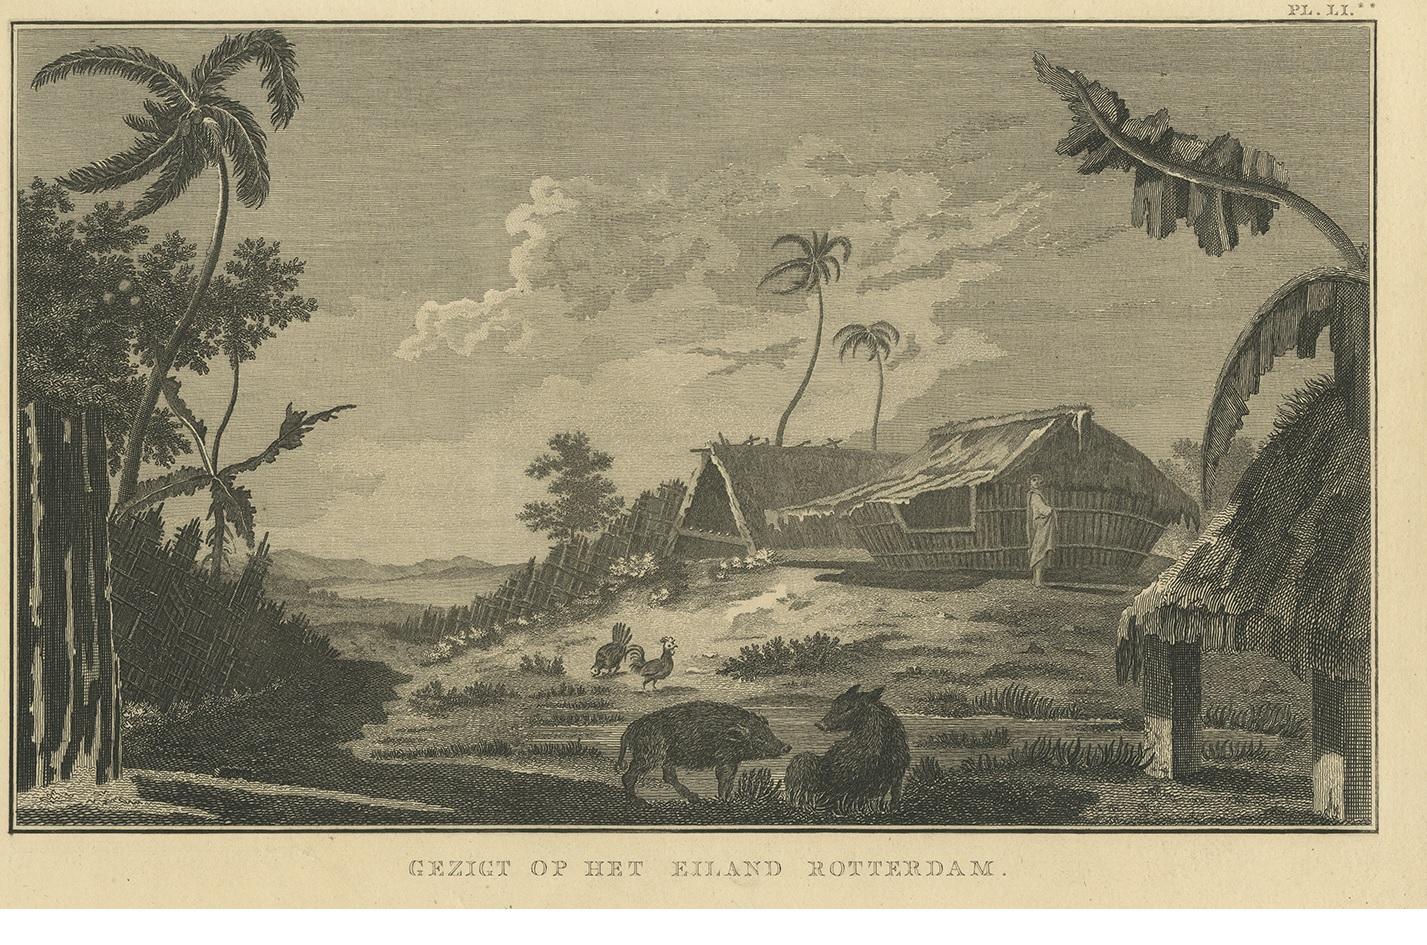 Antique print titled 'Gezigt op het eiland Rotterdam'. This is an original copper engraving of a view of Rotterdam Island, Pacific. Originates from 'Reizen Rondom de Waereld door James Cook (..)'. 